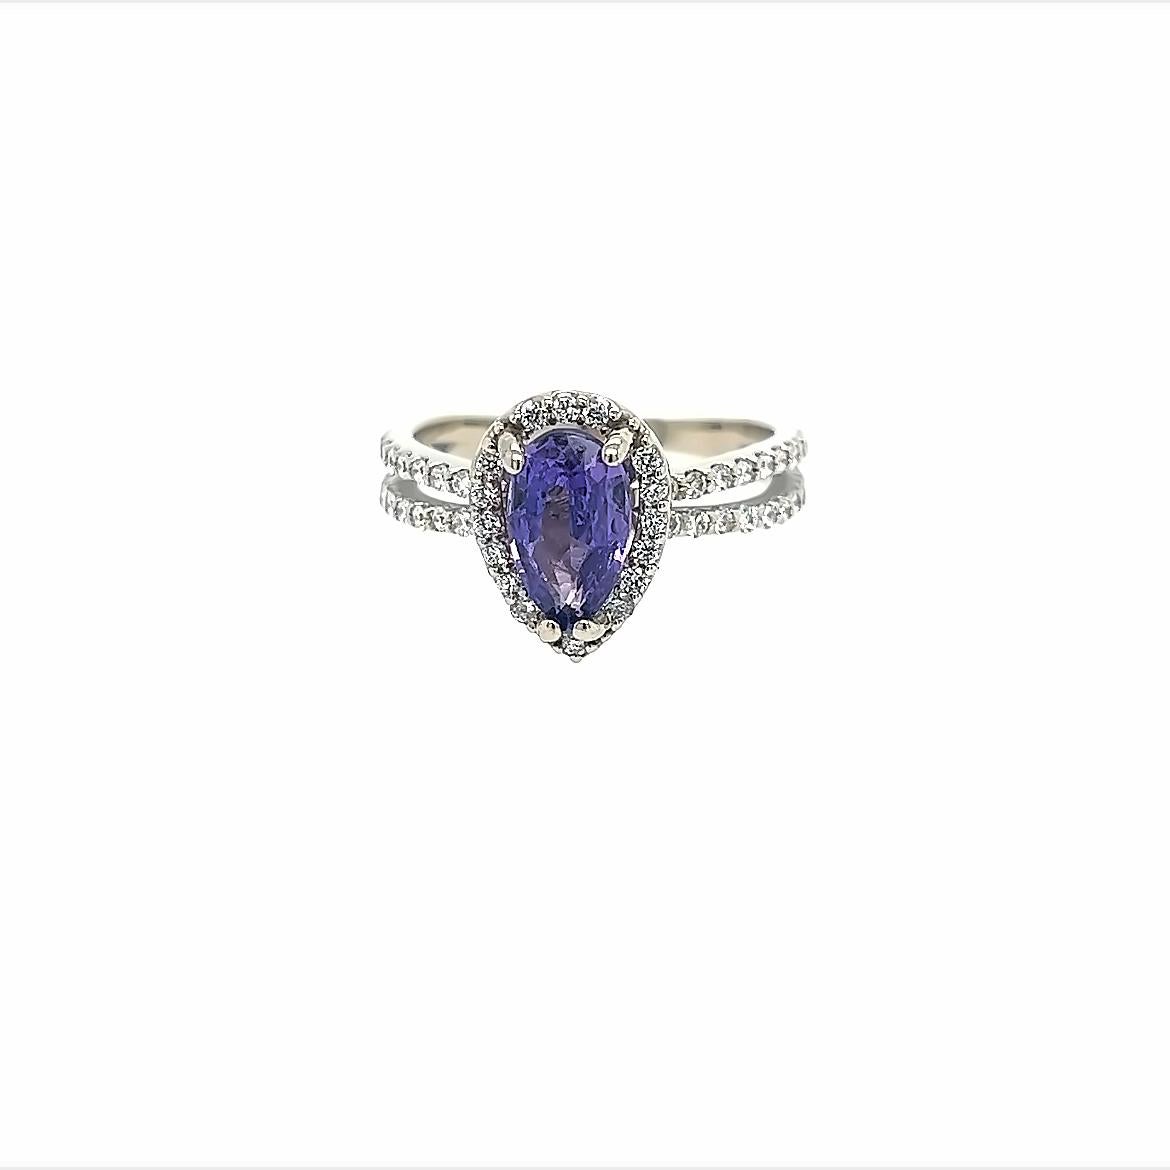 1.54 Carat Ceylon Violet Stunning Sapphire & Diamond Ring Set in Wht 14k Gold In New Condition For Sale In Port Richey, FL